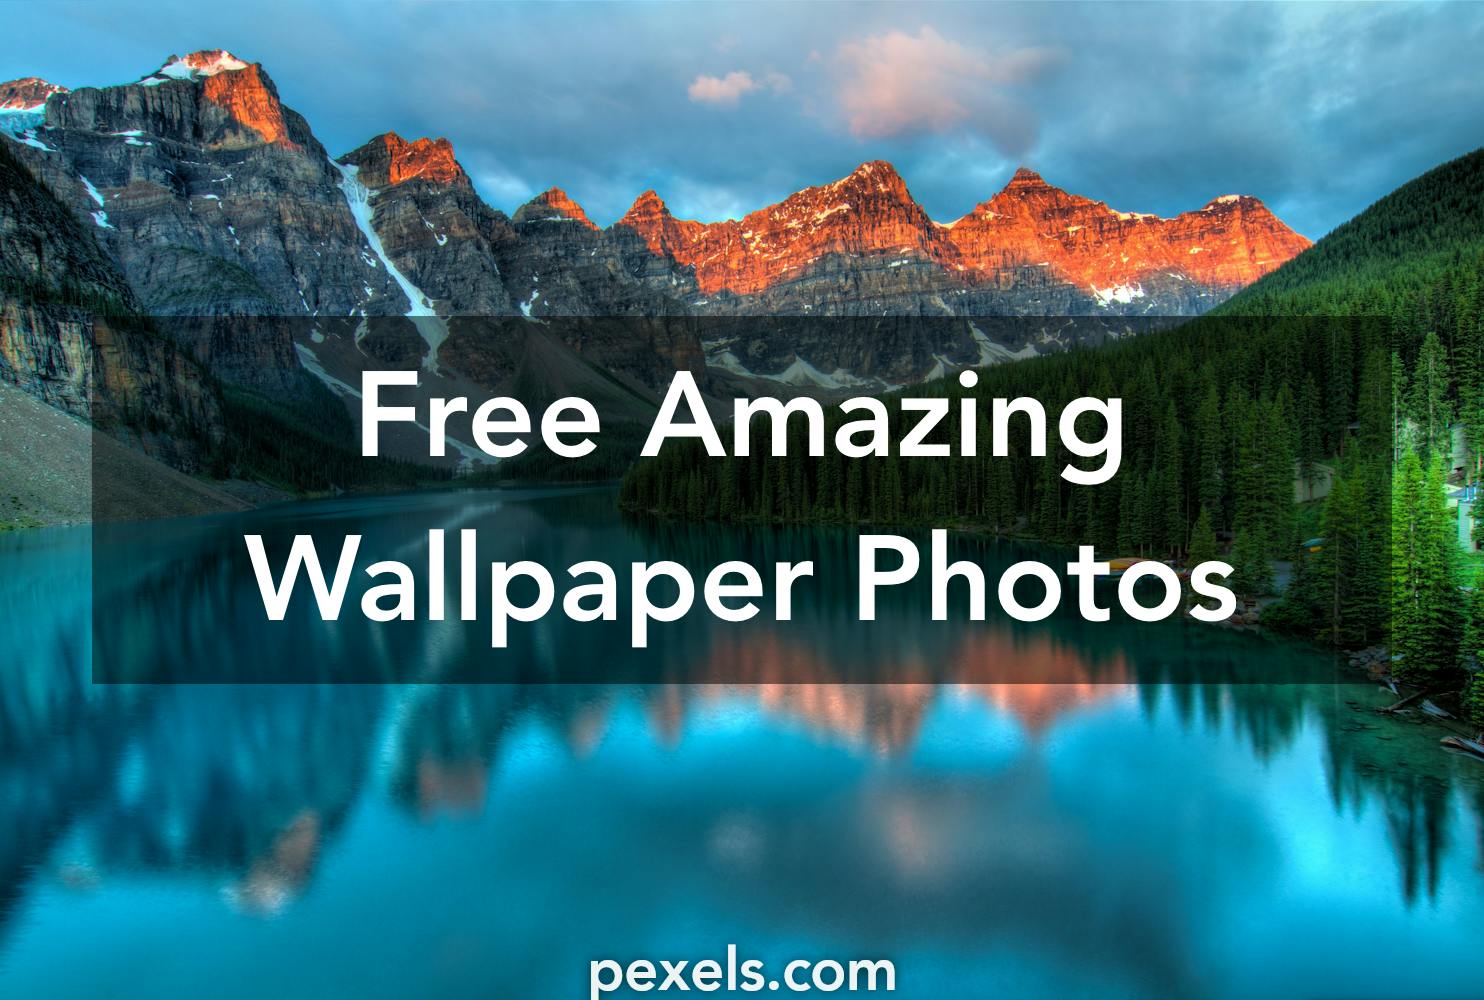 1000+ Amazing Amazing Wallpaper Photos · Pexels · Free Stock Photos